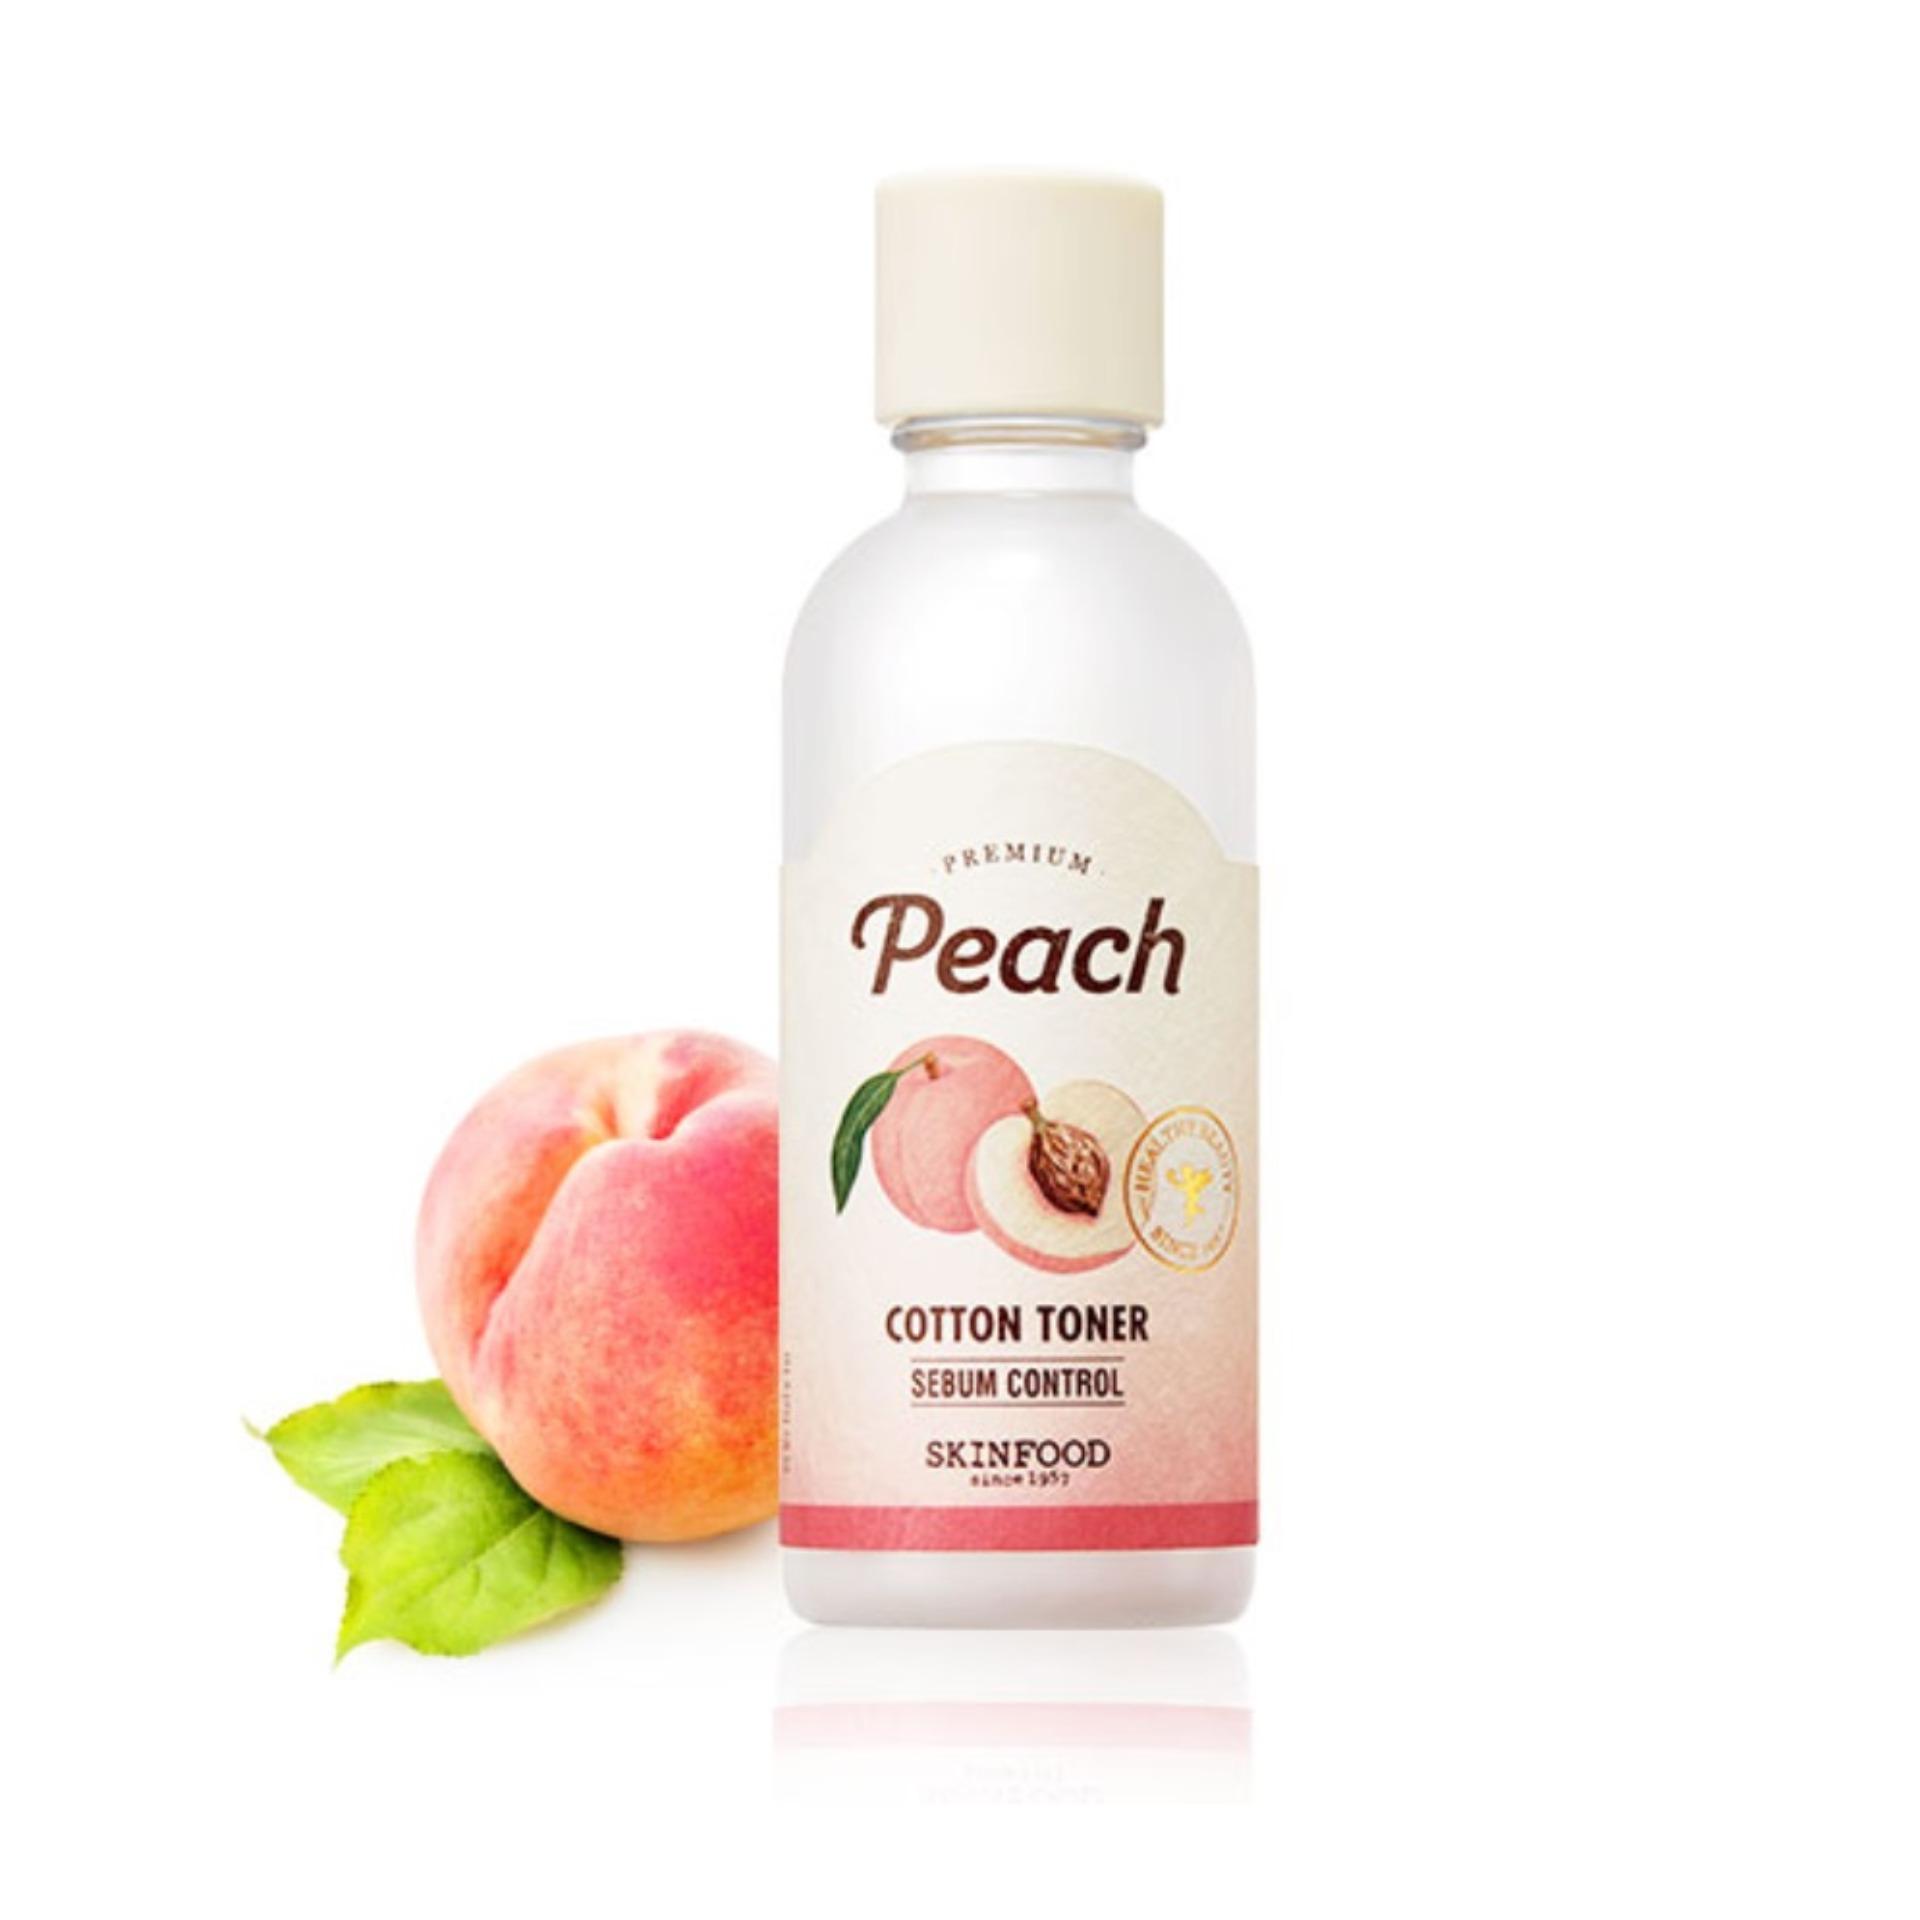 Skinfood Premium Peach Cotton Toner 180 ml โทนเนอร์บำรุงผิวสารบำรุงจาก Peach Extract ช่วยควบคุมความมันบนใบหน้า